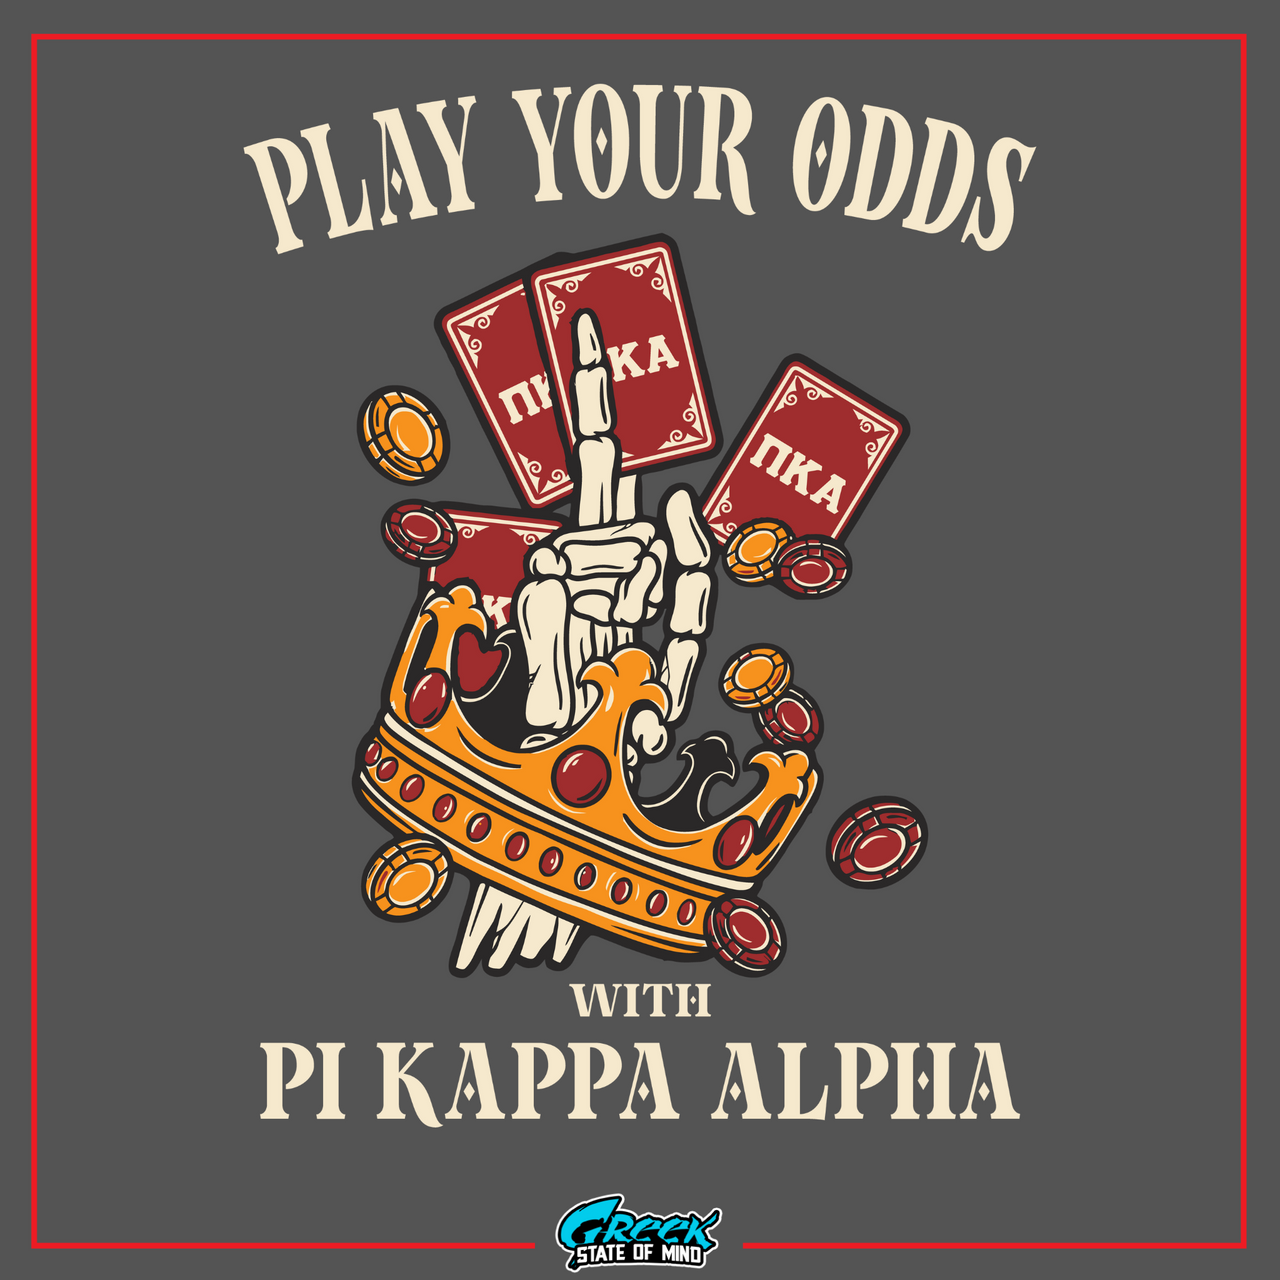 Pi Kappa Alpha Graphic T-Shirt | Play Your Odds | Pi kappa alpha fraternity shirt design